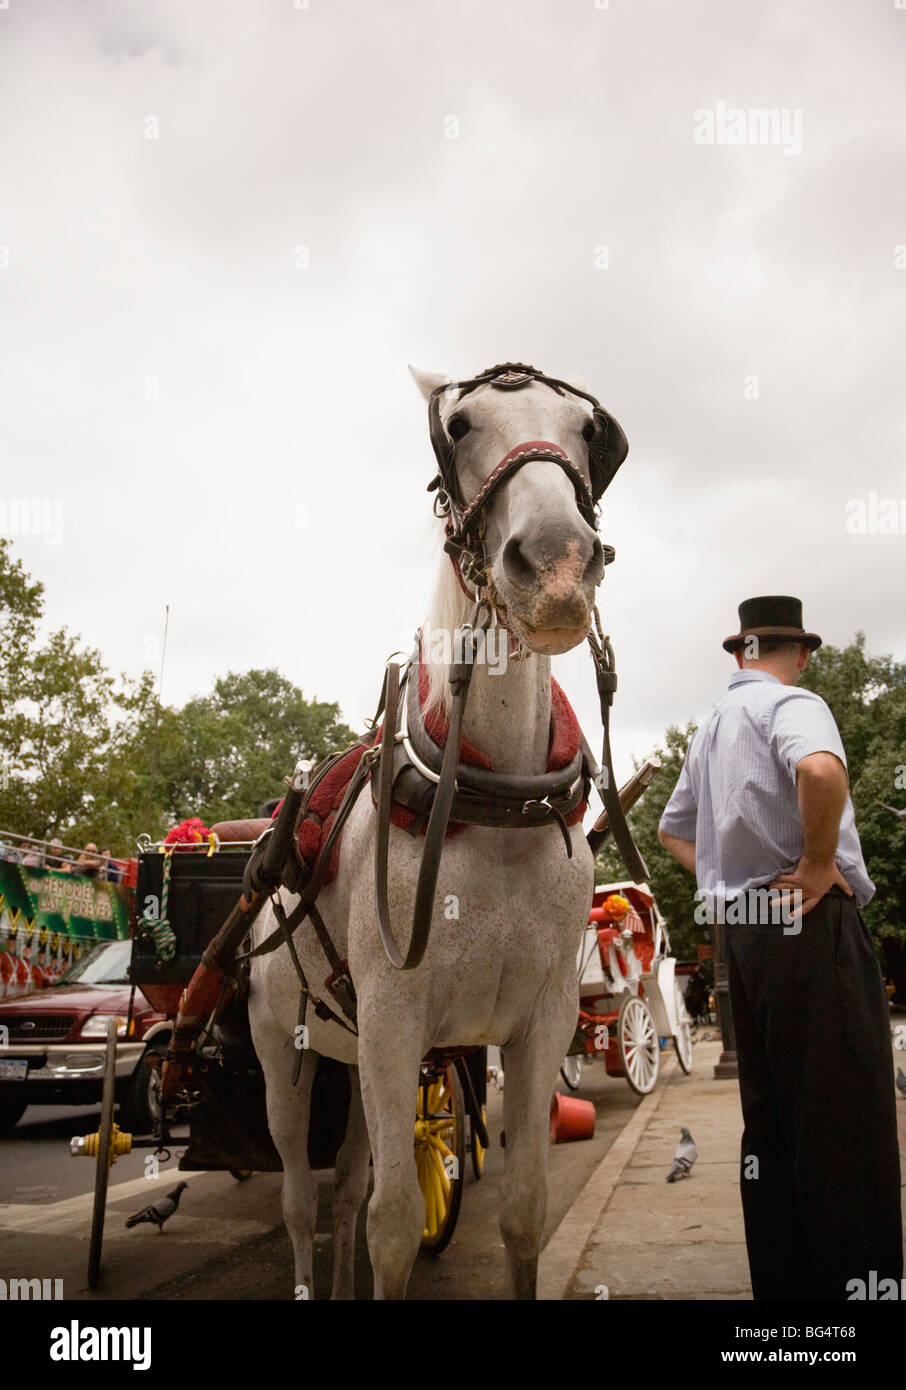 Horse and carriage at Central Park, Manhattan, New York City, NY, USA Stock Photo